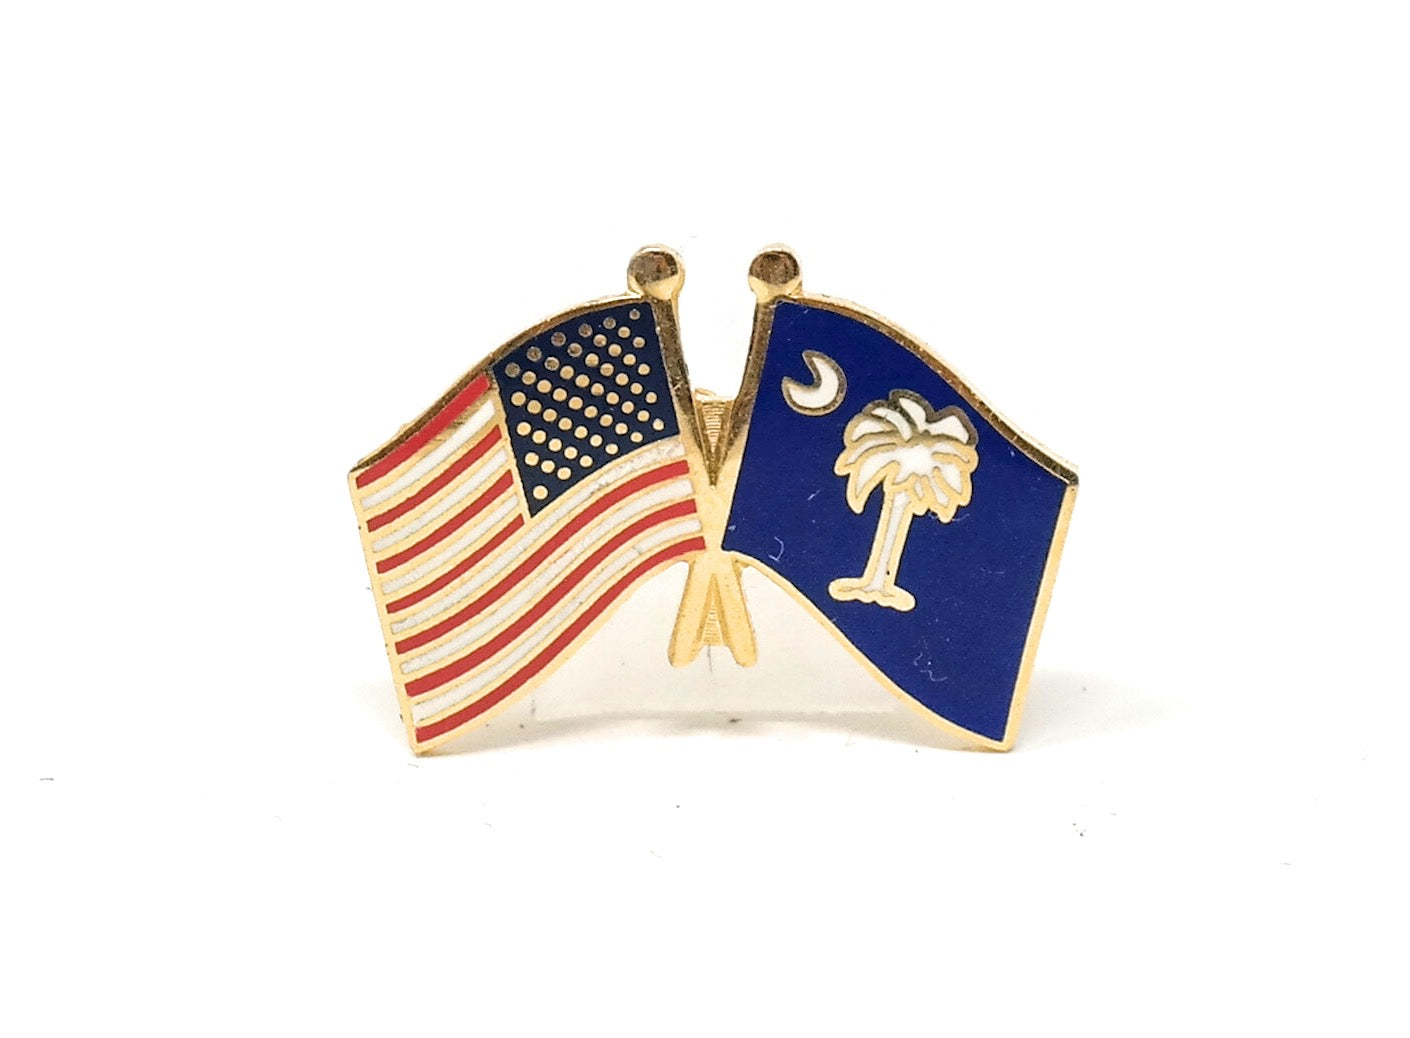 South Carolina State & USA Friendship Flags Lapel Pin